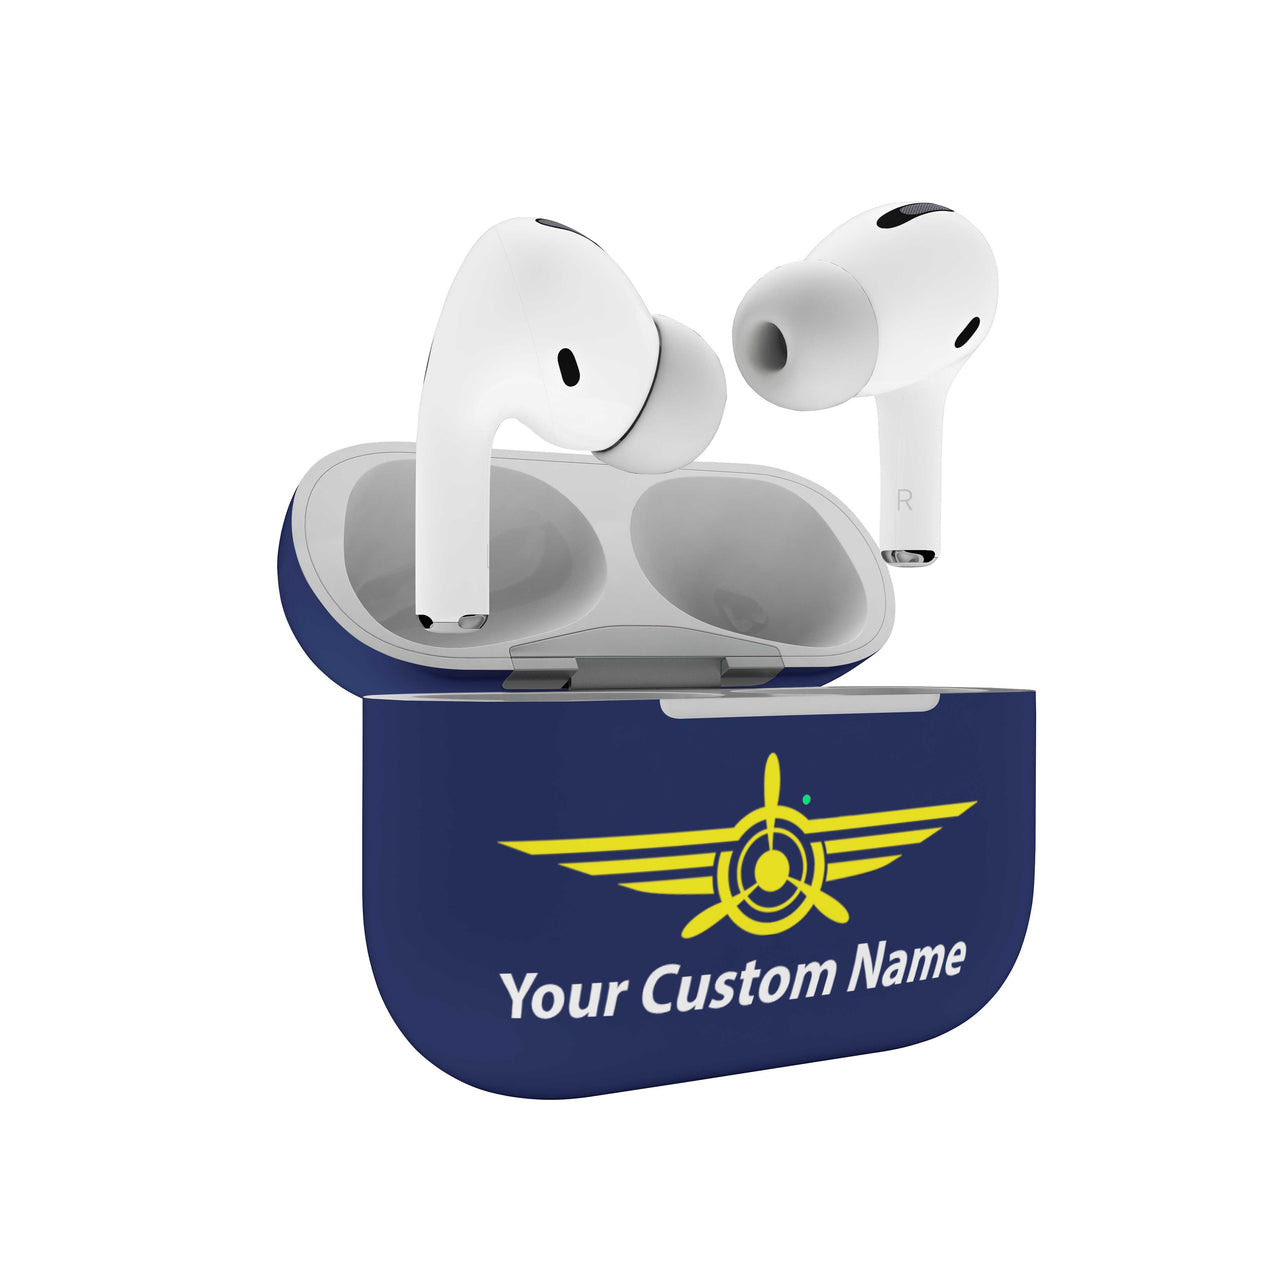 Custom Name (Badge 3) Designed Airpods "Pro" Cases